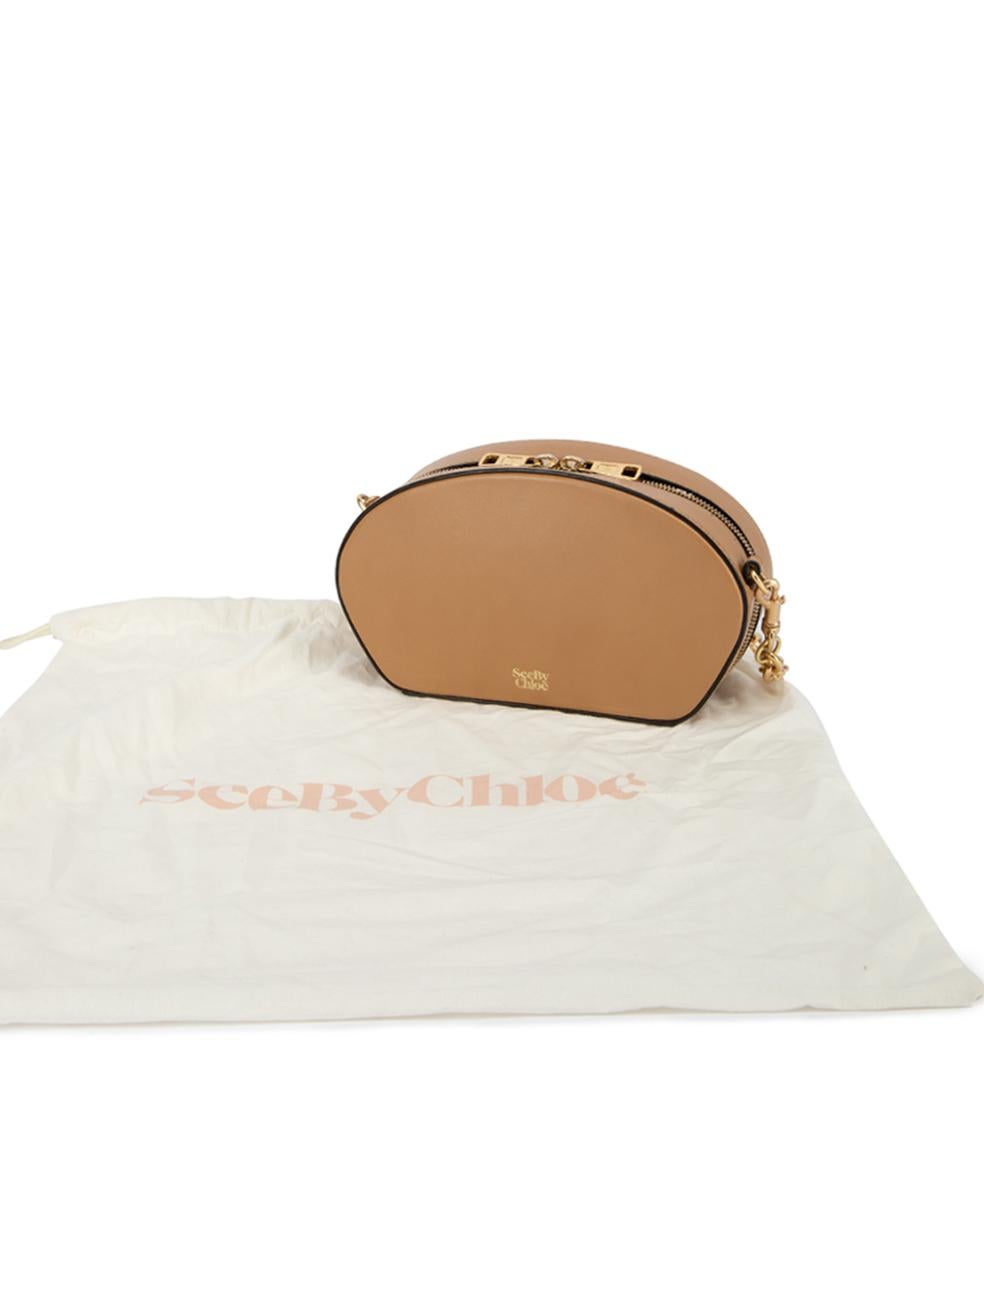 Chloé Women's See by Chloé Camel Leather Crossbody Shell Bag 3